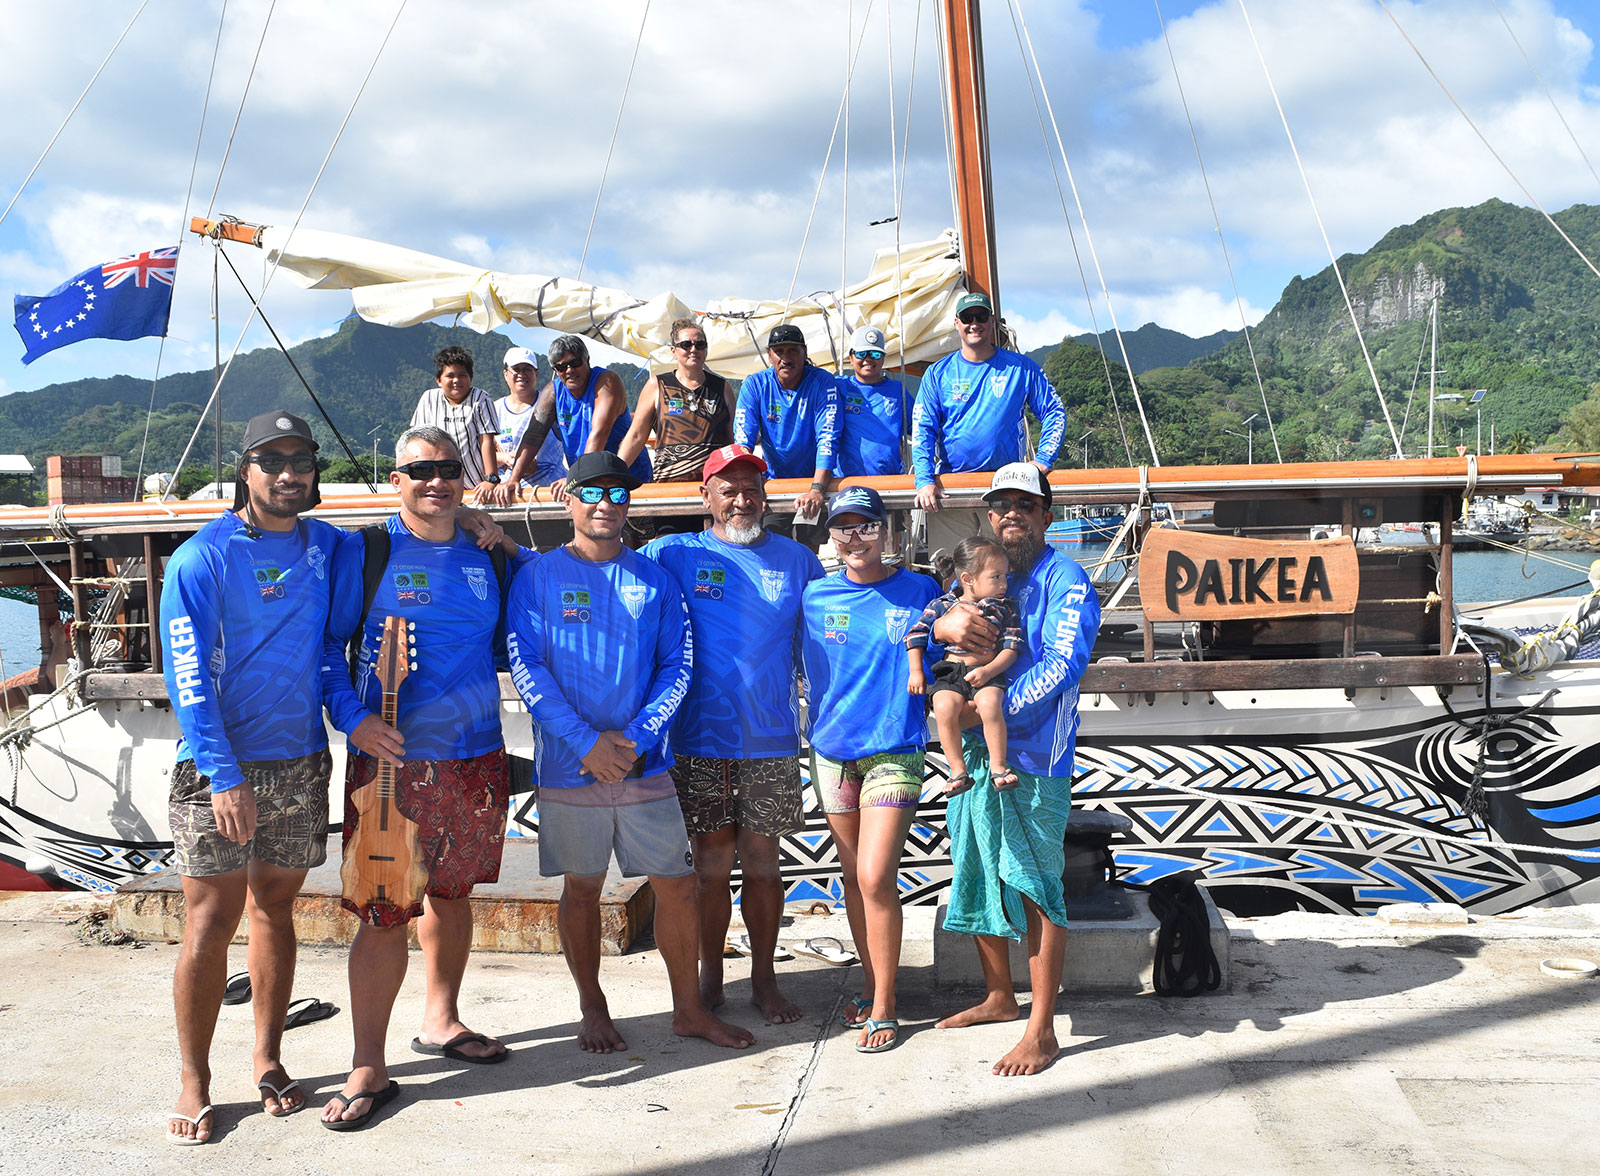 Paikea sets sail for Samoa